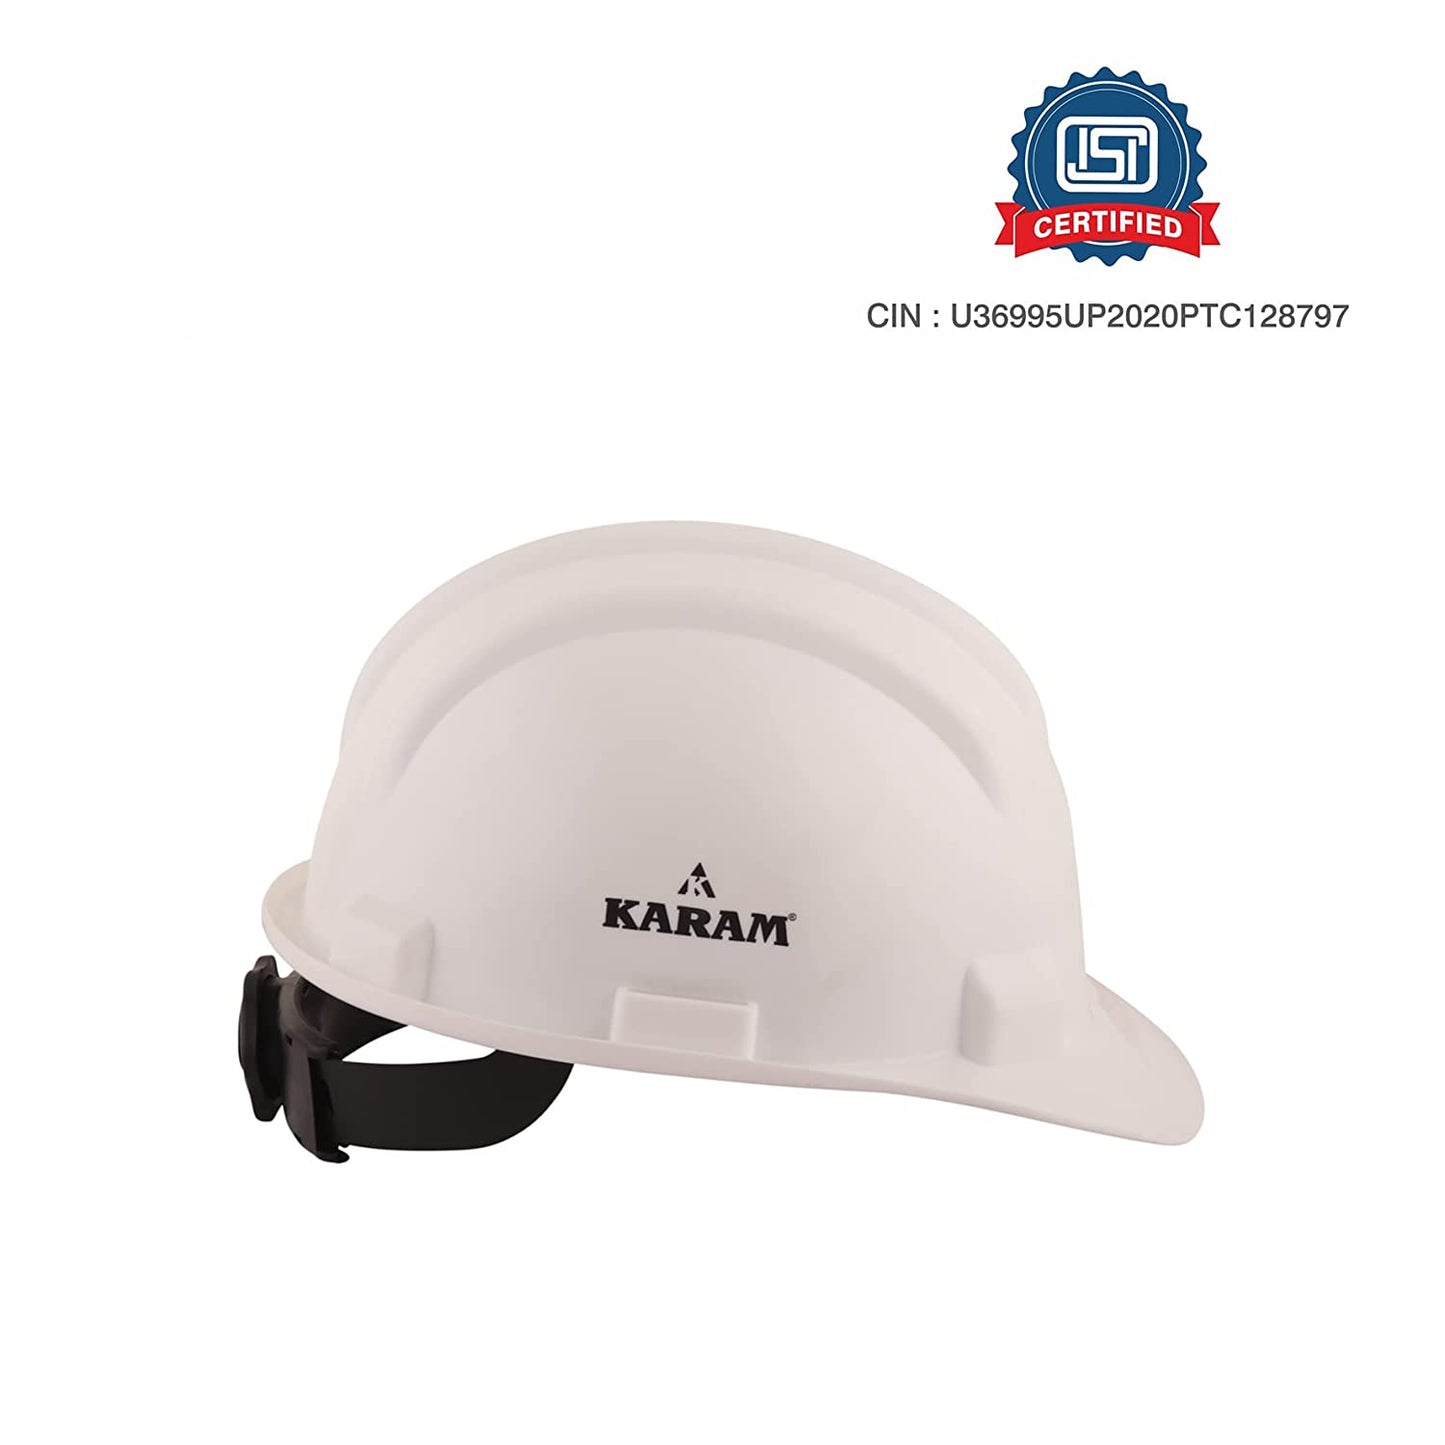 Karam Helmet Ratchet type